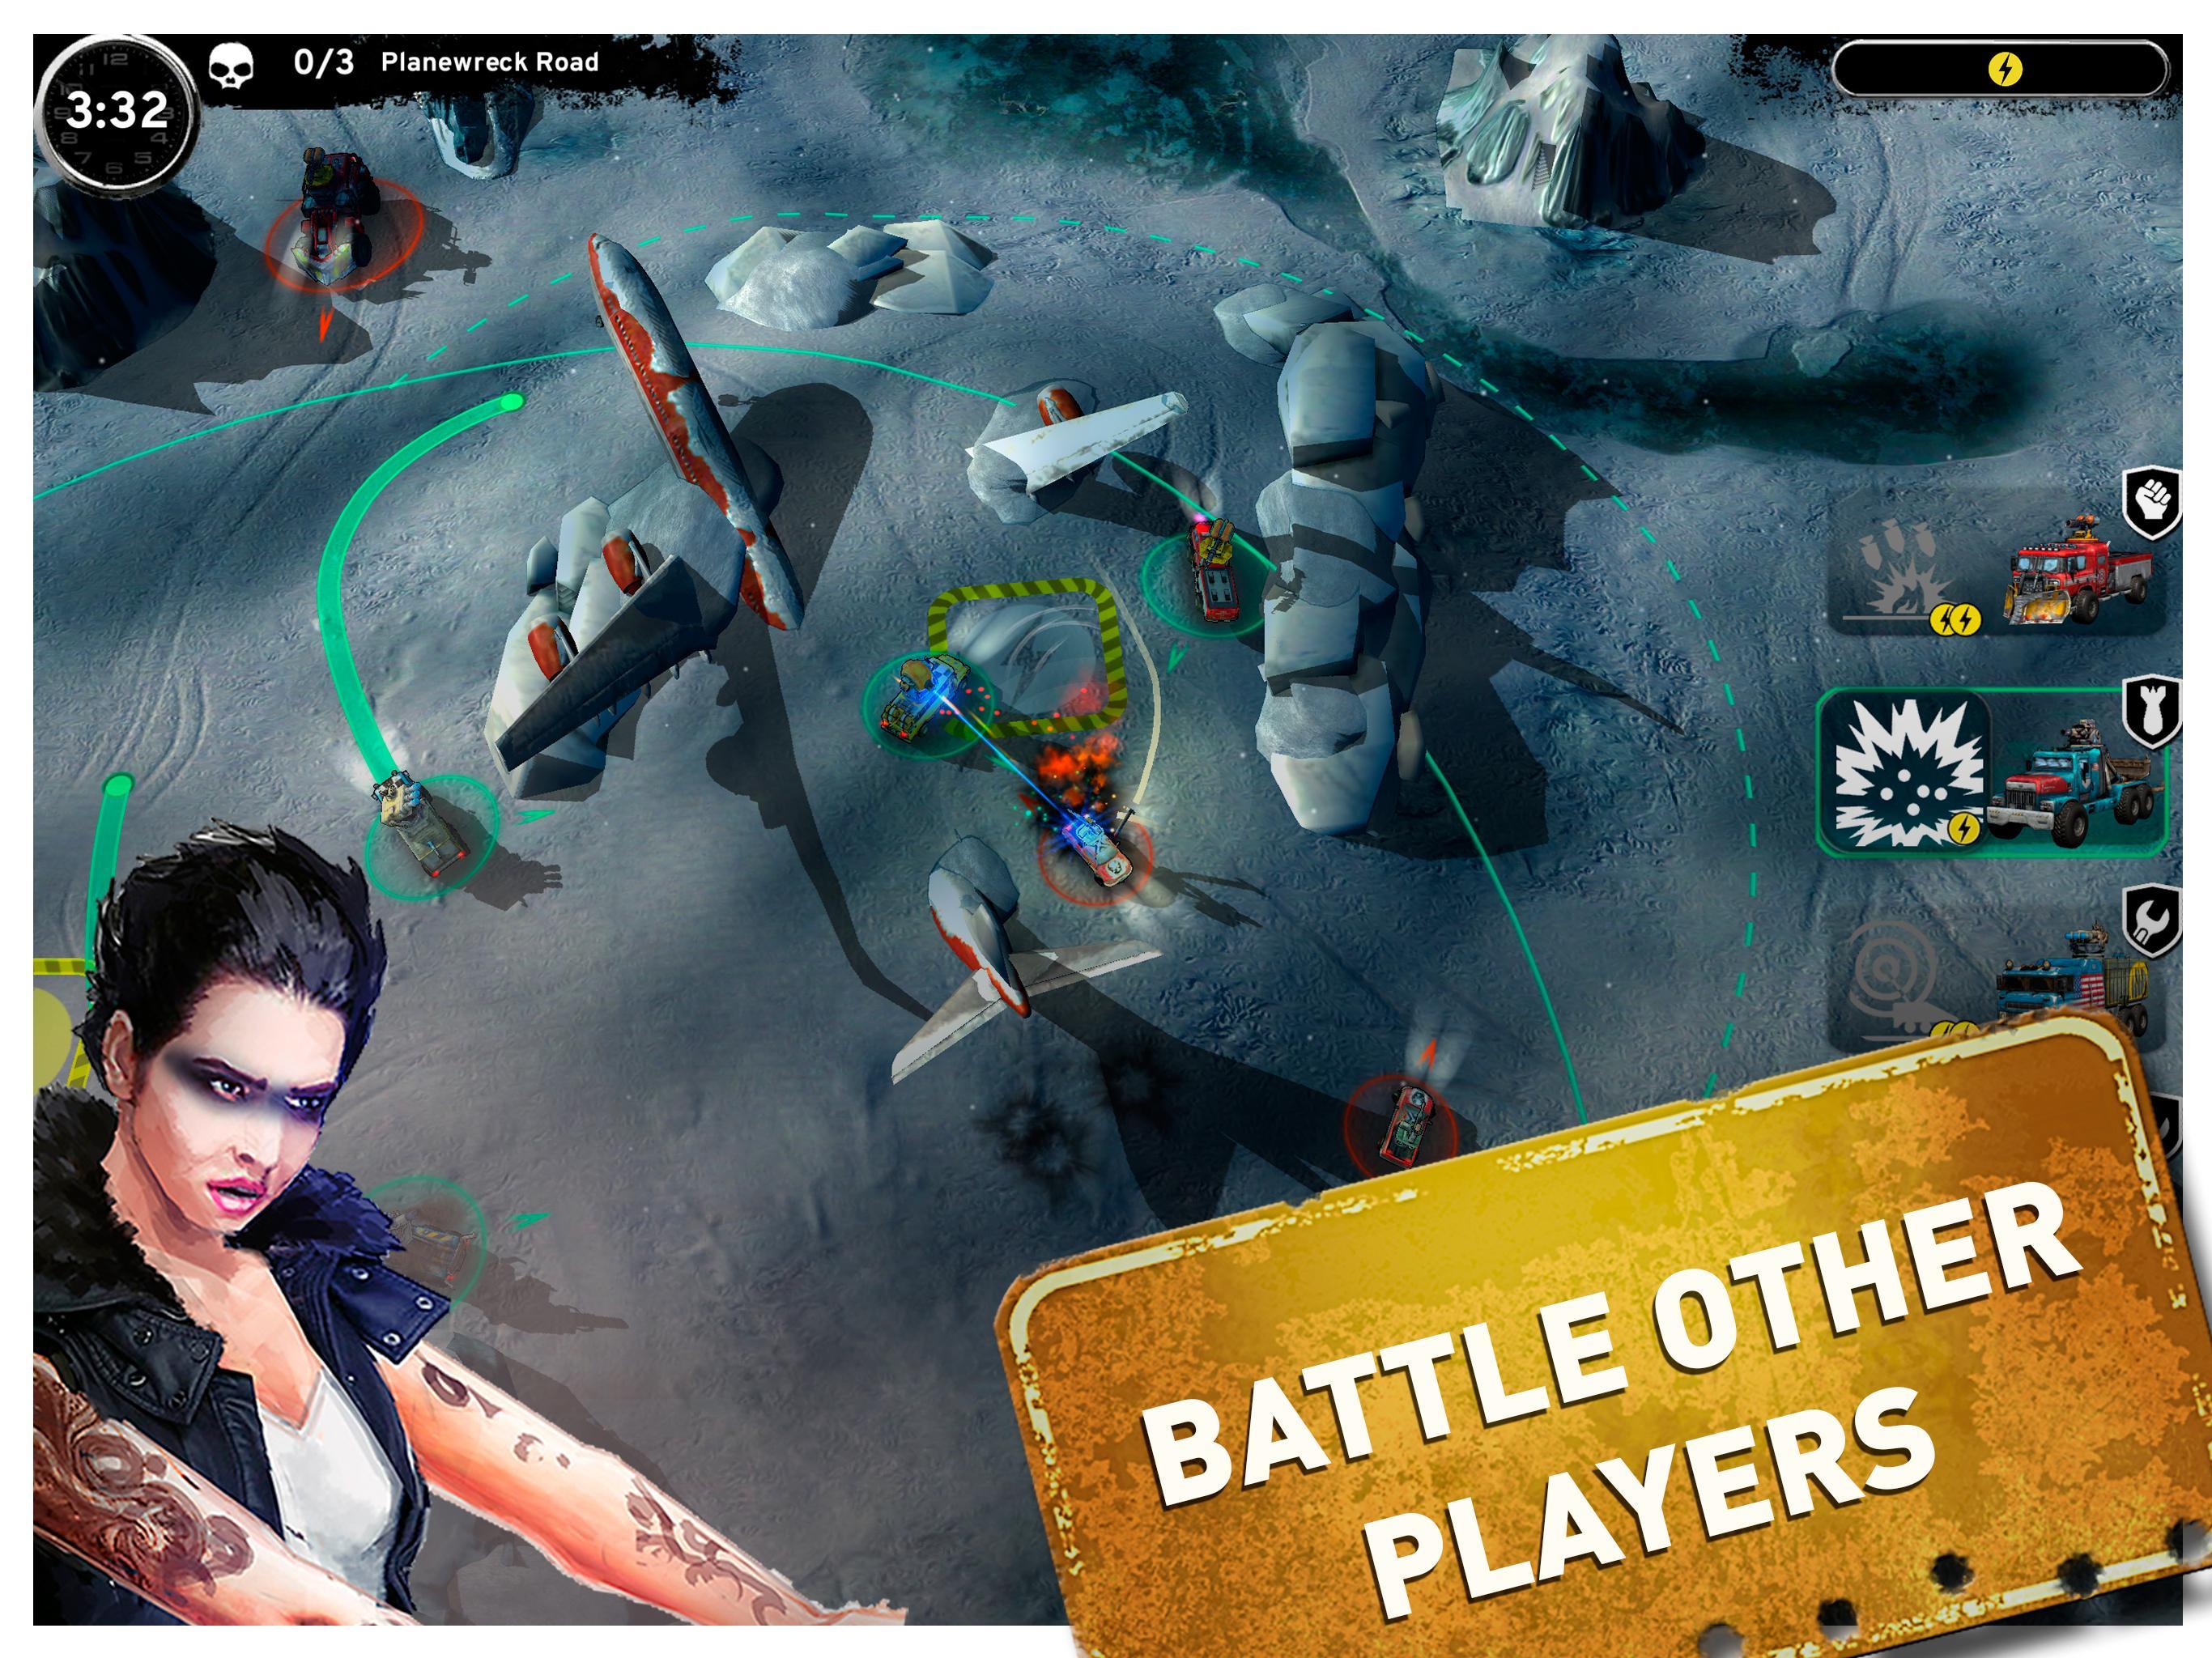 Winterstate screenshot game